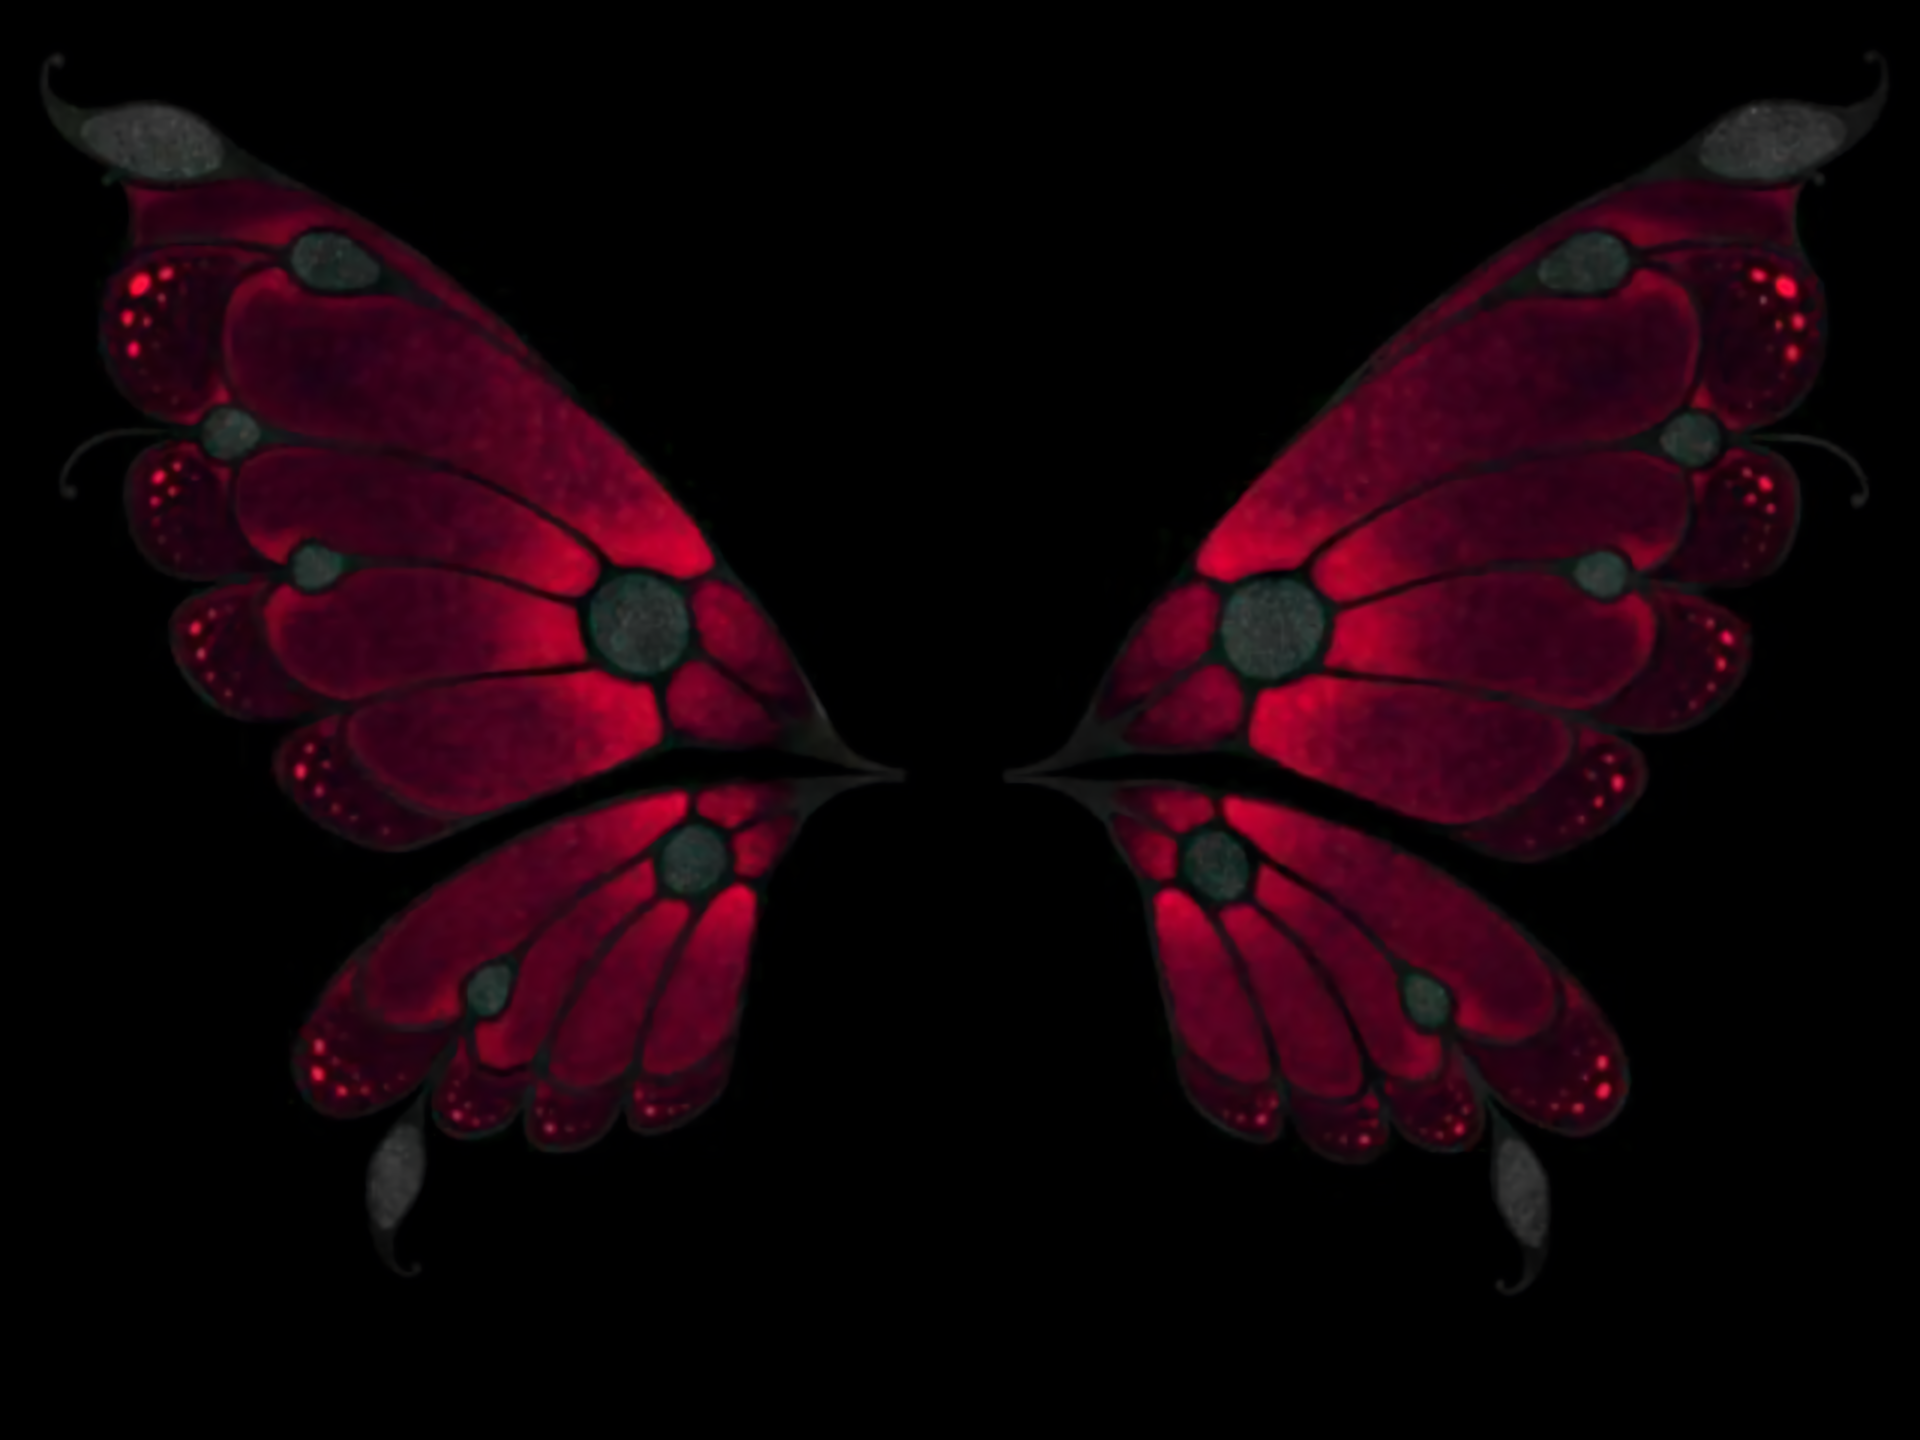 Butterfly Wings HD Wallpaper Background Image